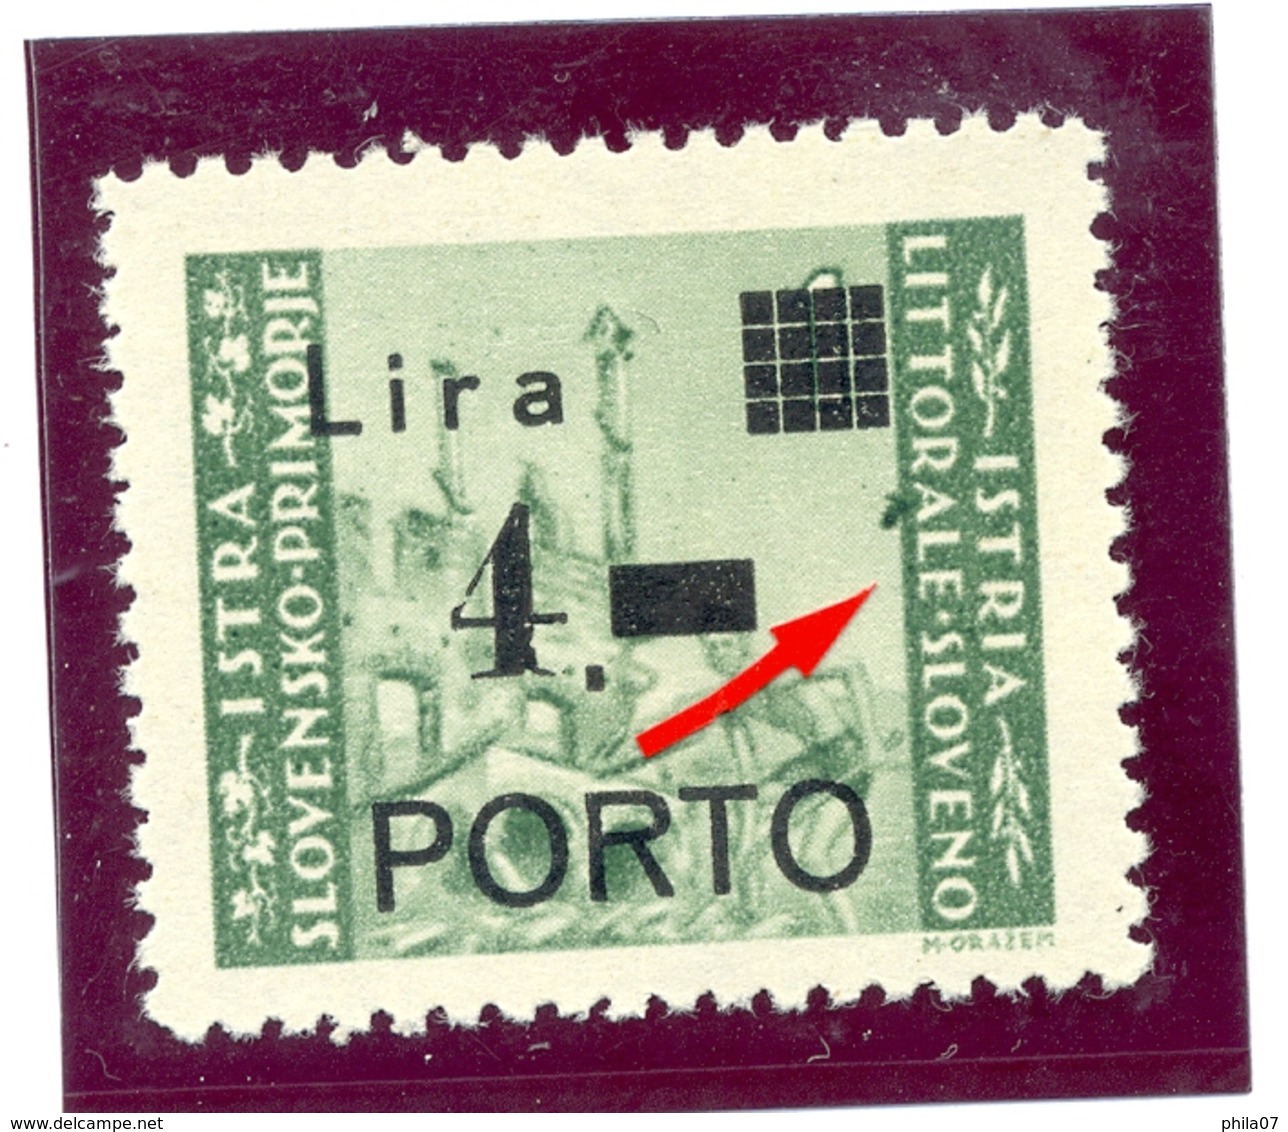 Italy, Yugoslavia - PS No. 10, Type Ia And Error On Basic Stamp Described Under B24-69.1.2, Novakovic. - Yugoslavian Occ.: Slovenian Shore